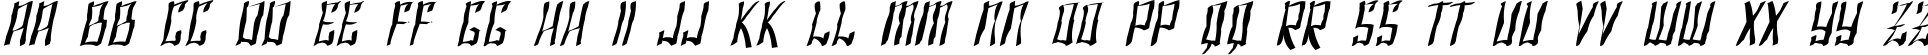 Пример написания английского алфавита шрифтом SF Shai Fontai Distressed Oblique